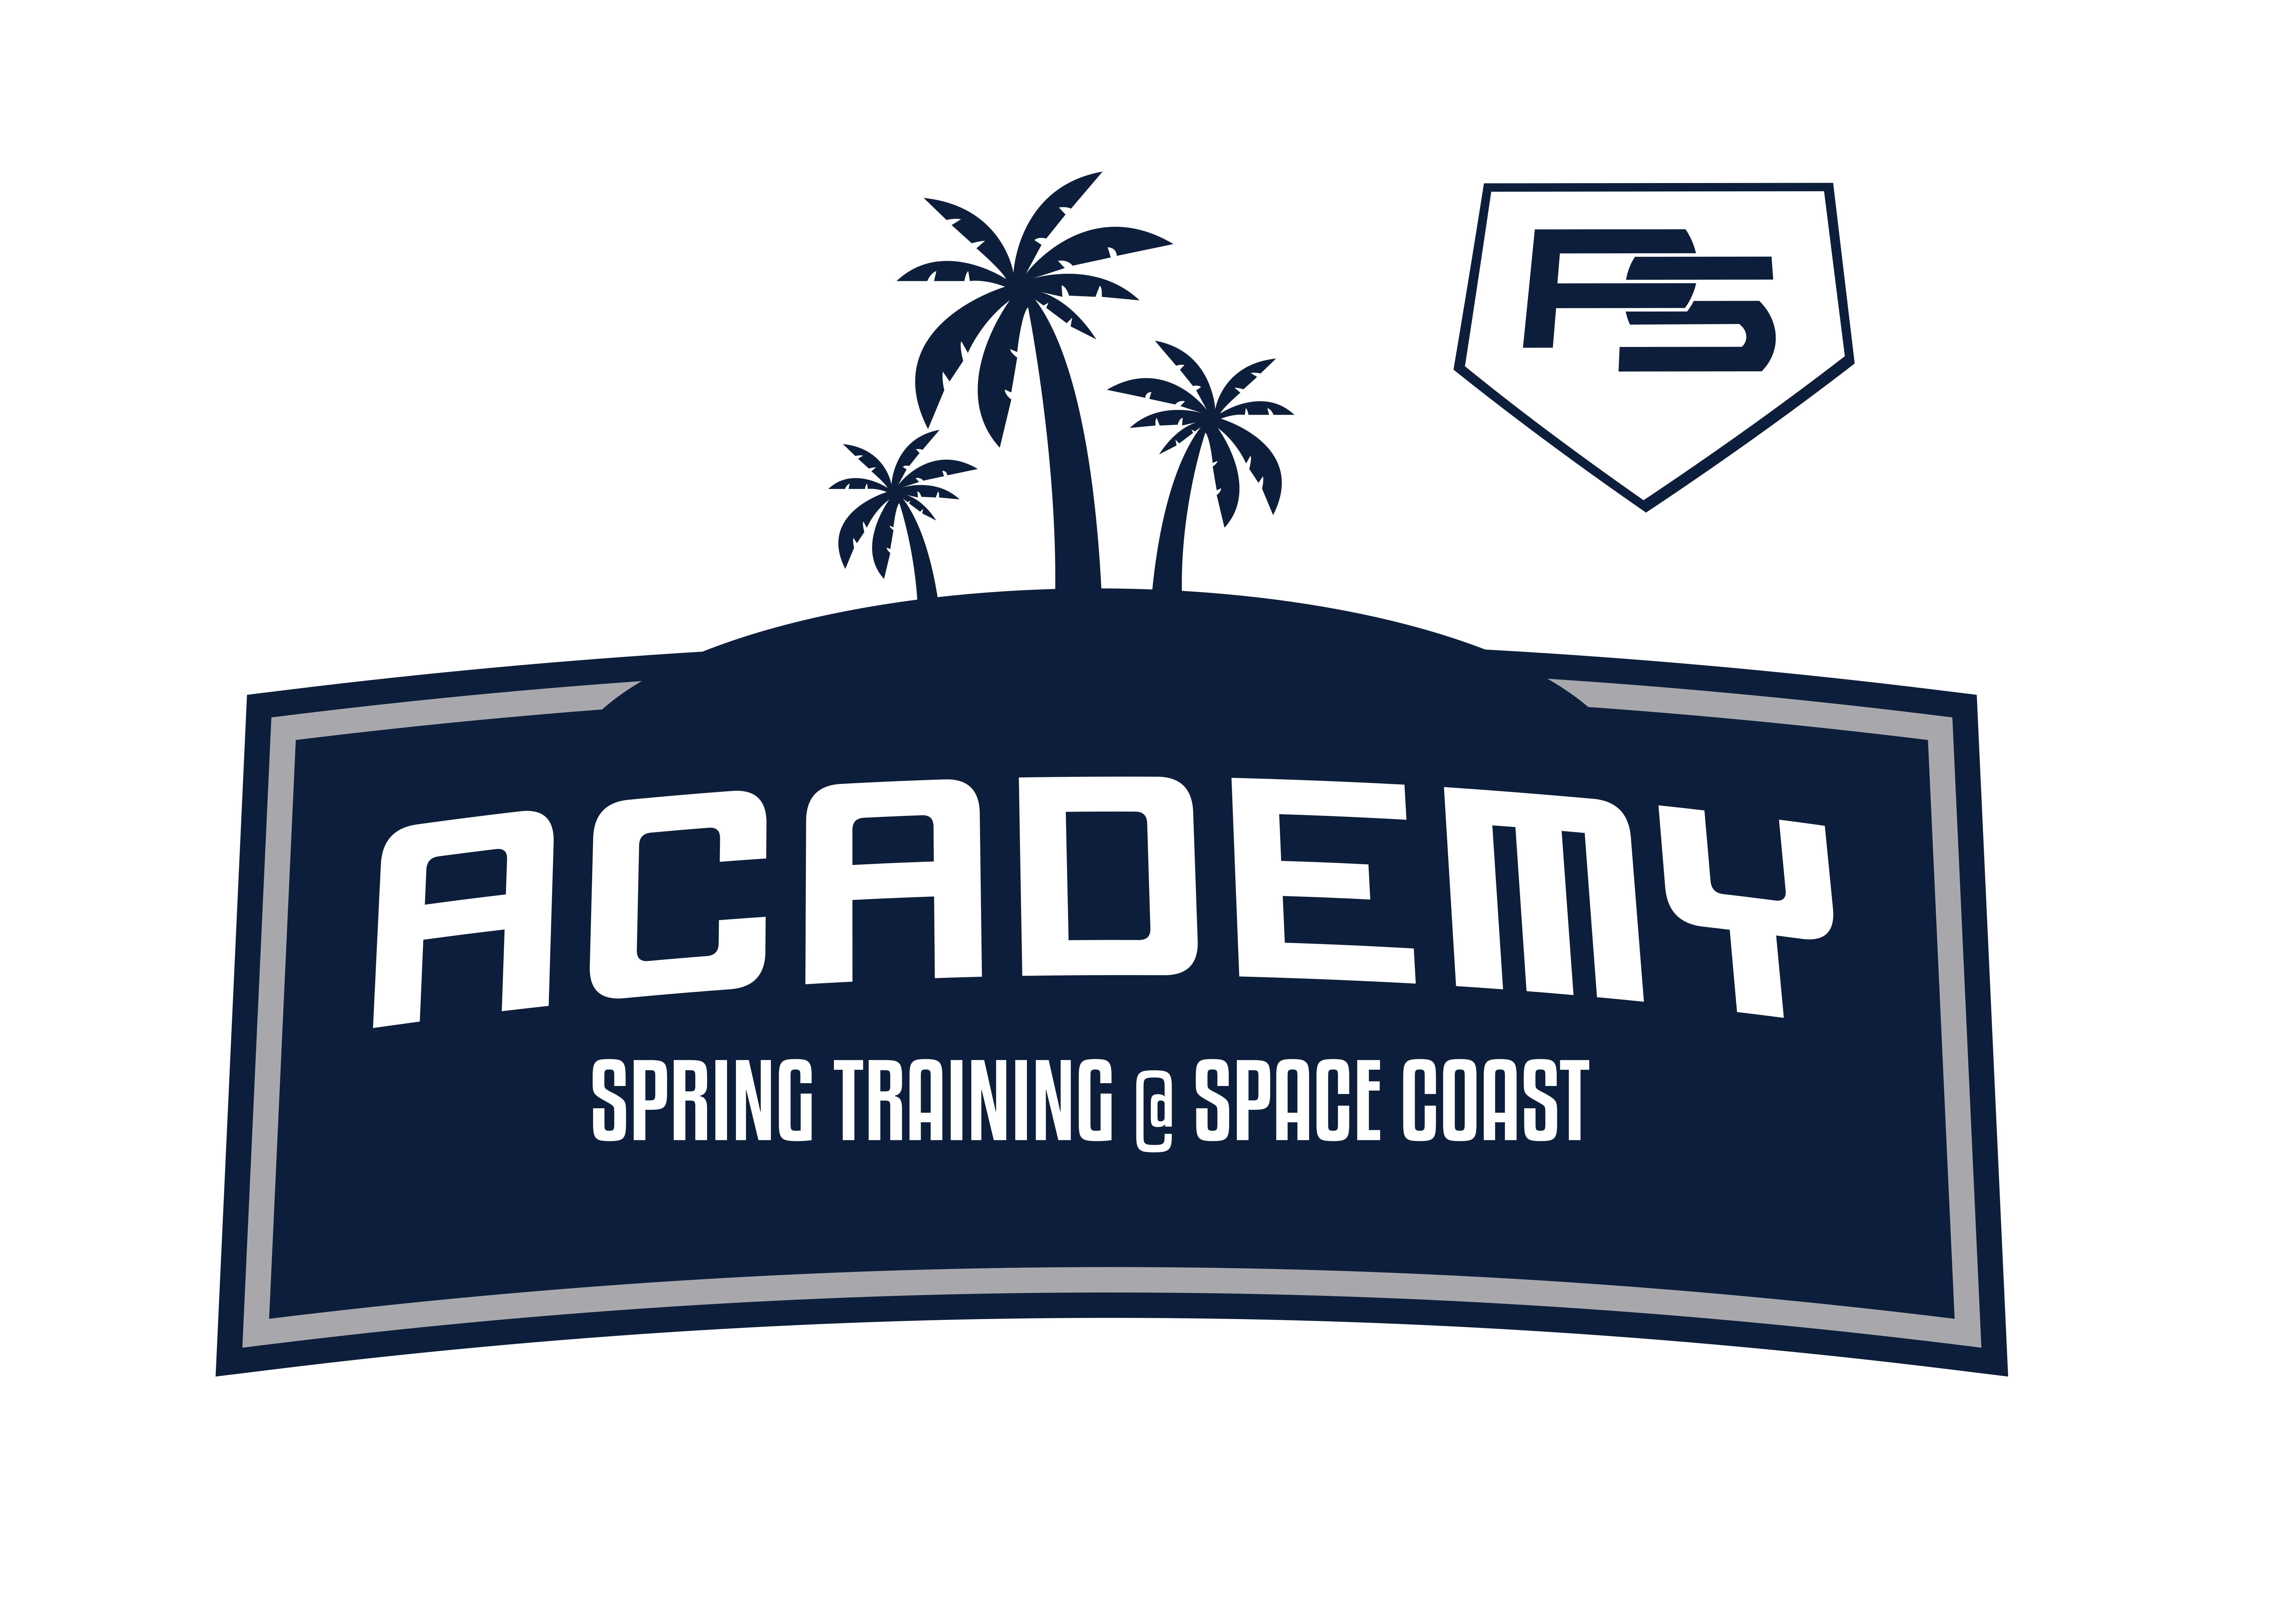 Spring Break @ Space Coast - International Academy Spring Training